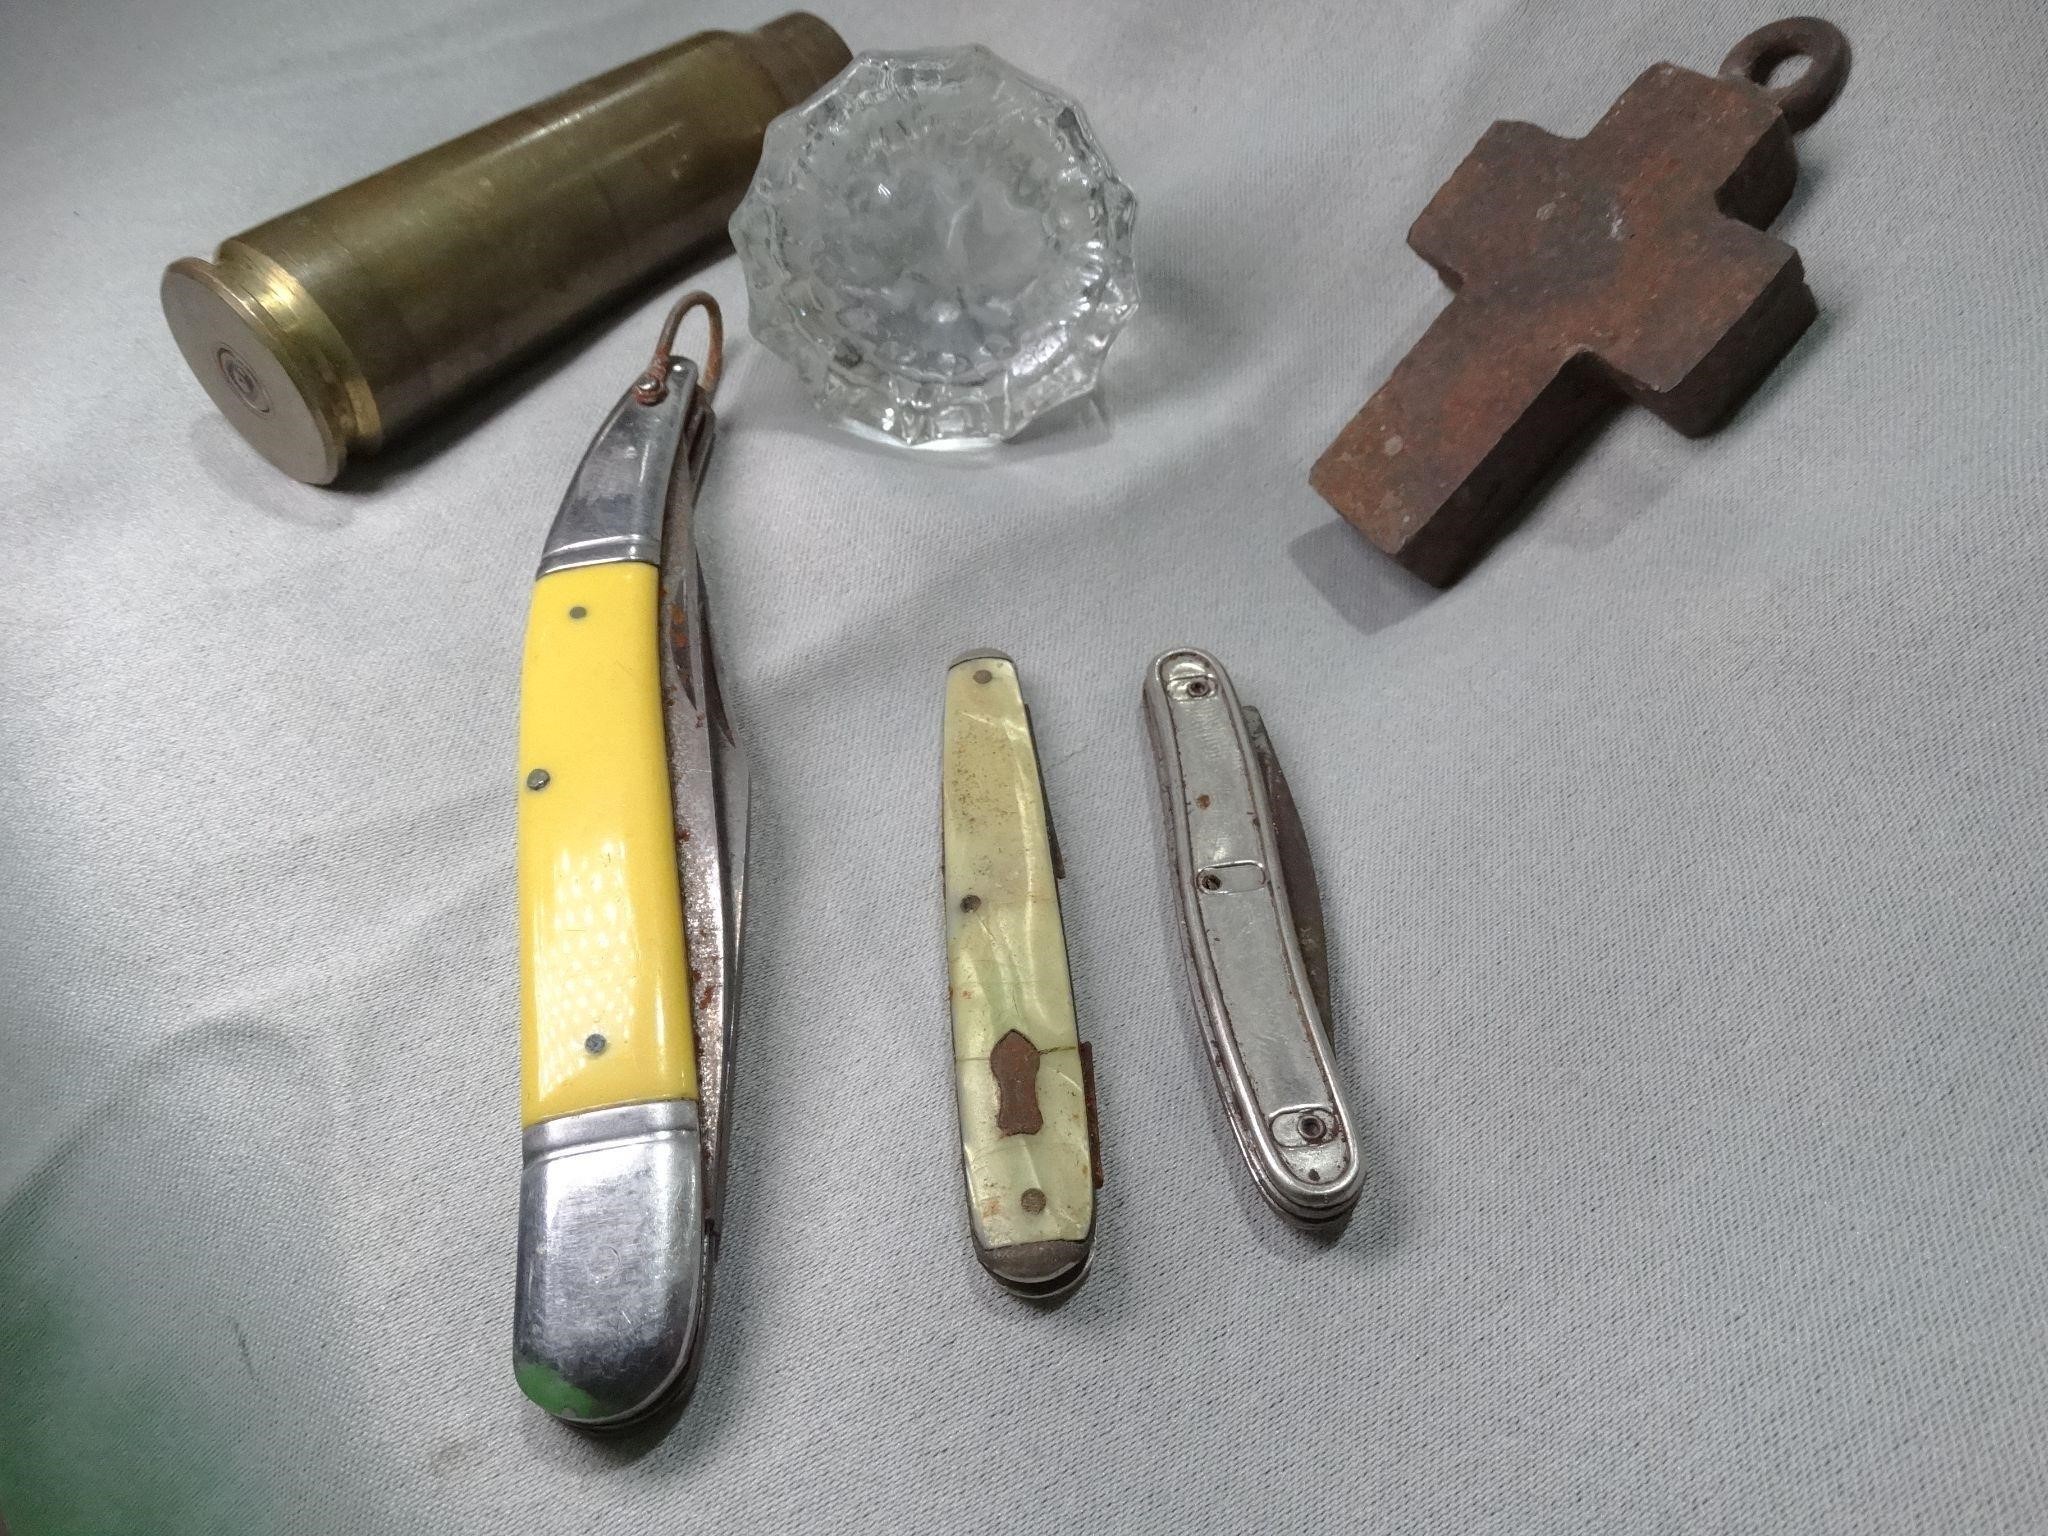 Iron Cross Knifes Glass Handle Casing Lot